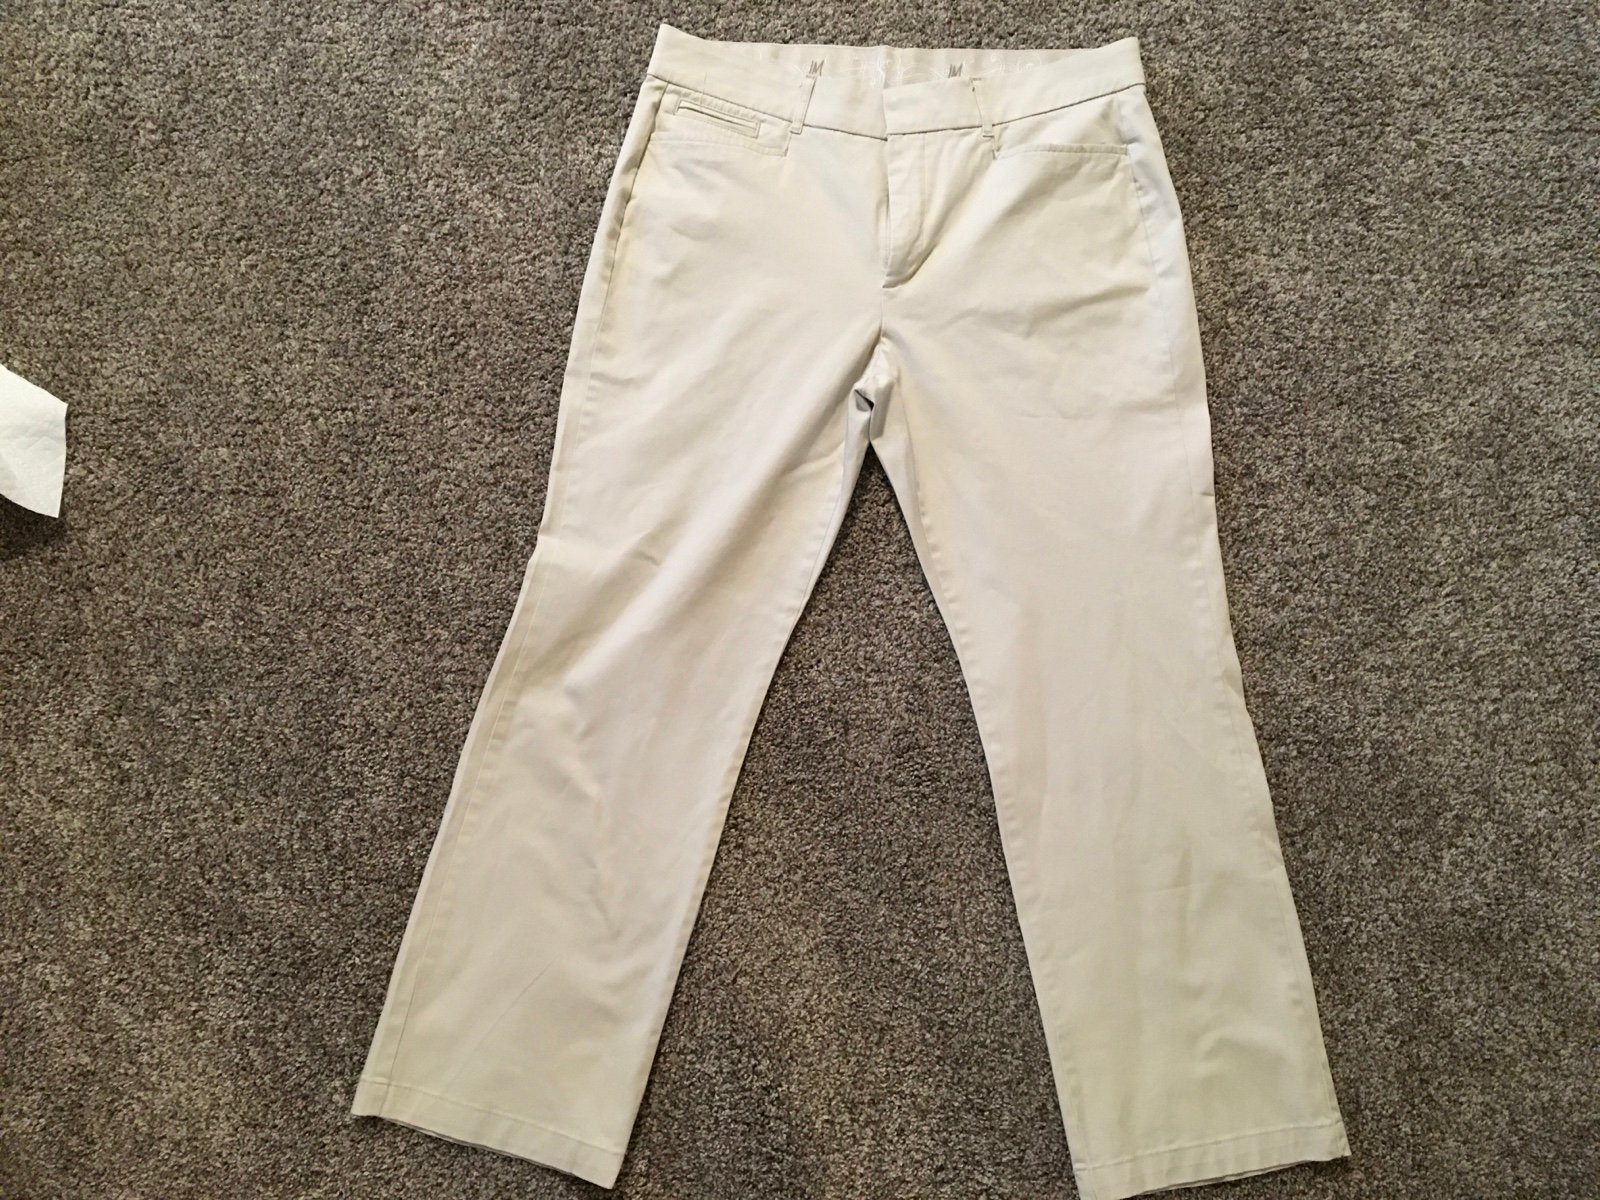 Wholesale price JM Collection Women Khaki pants with stretch size 14 m2llLlLfR outlet online shop